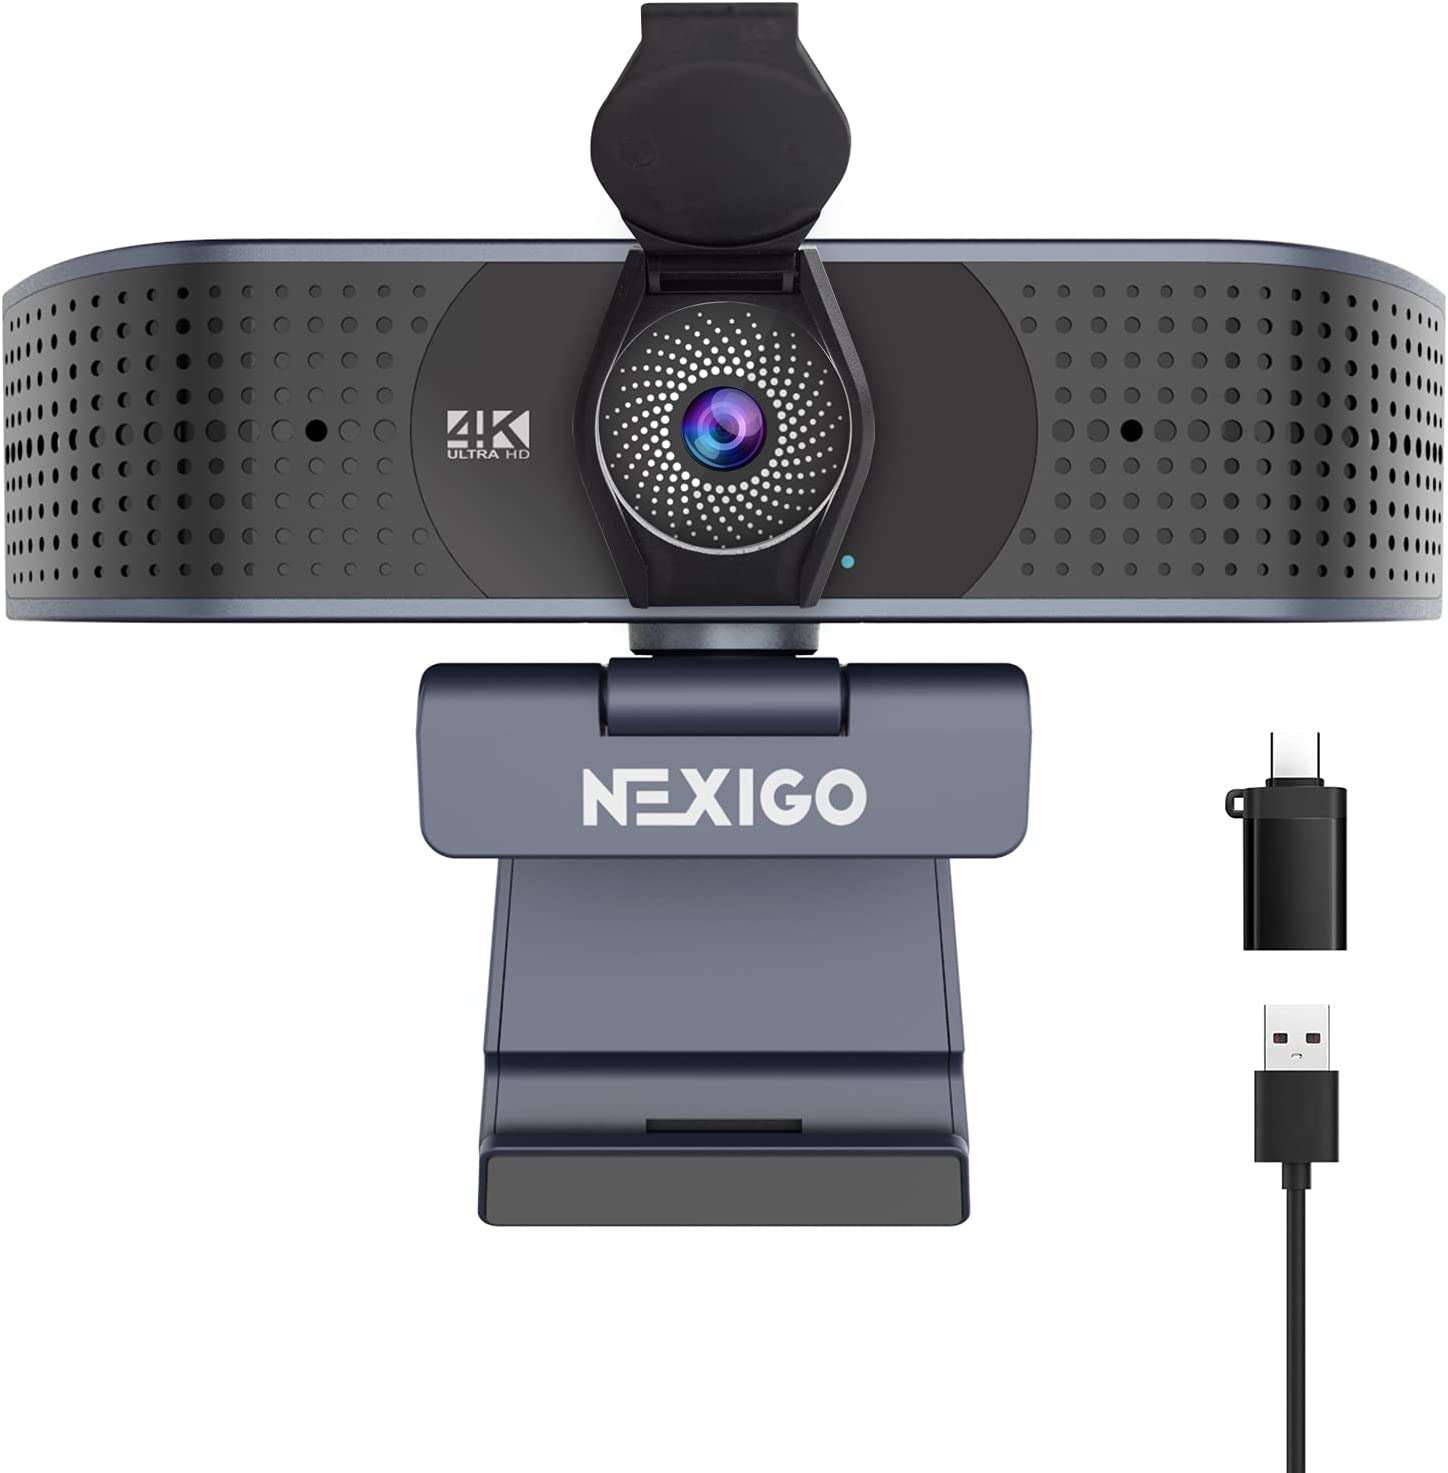 The NexiGo N690 webcam comes with a USB and an A-to-C converter.